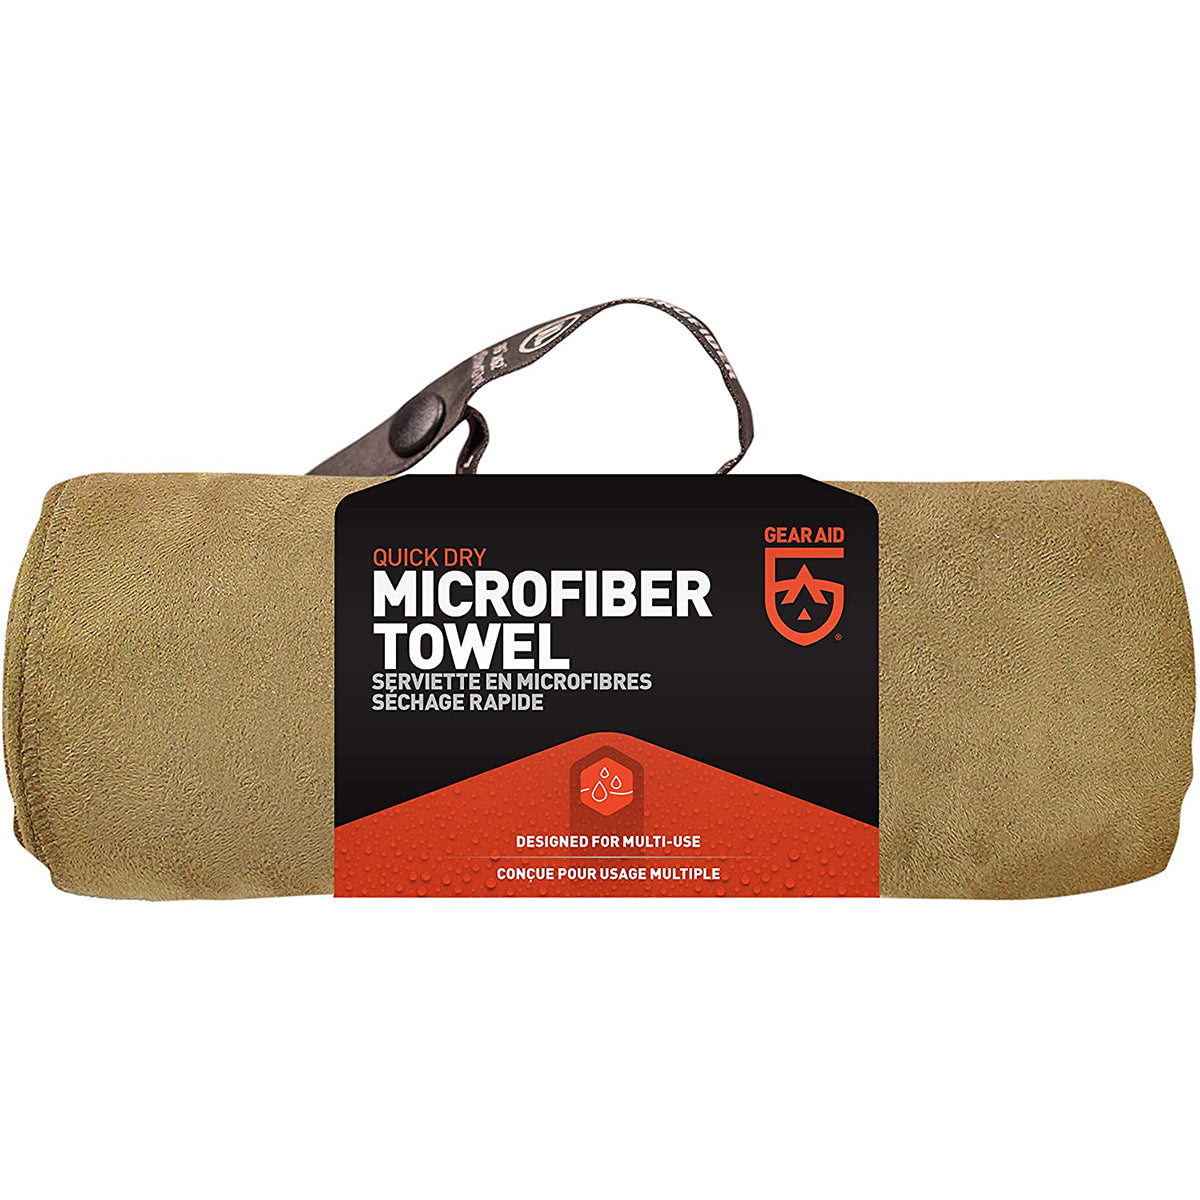 McNett Tactical Microfiber Ultra Compact Towel - Coyote Gear Aid